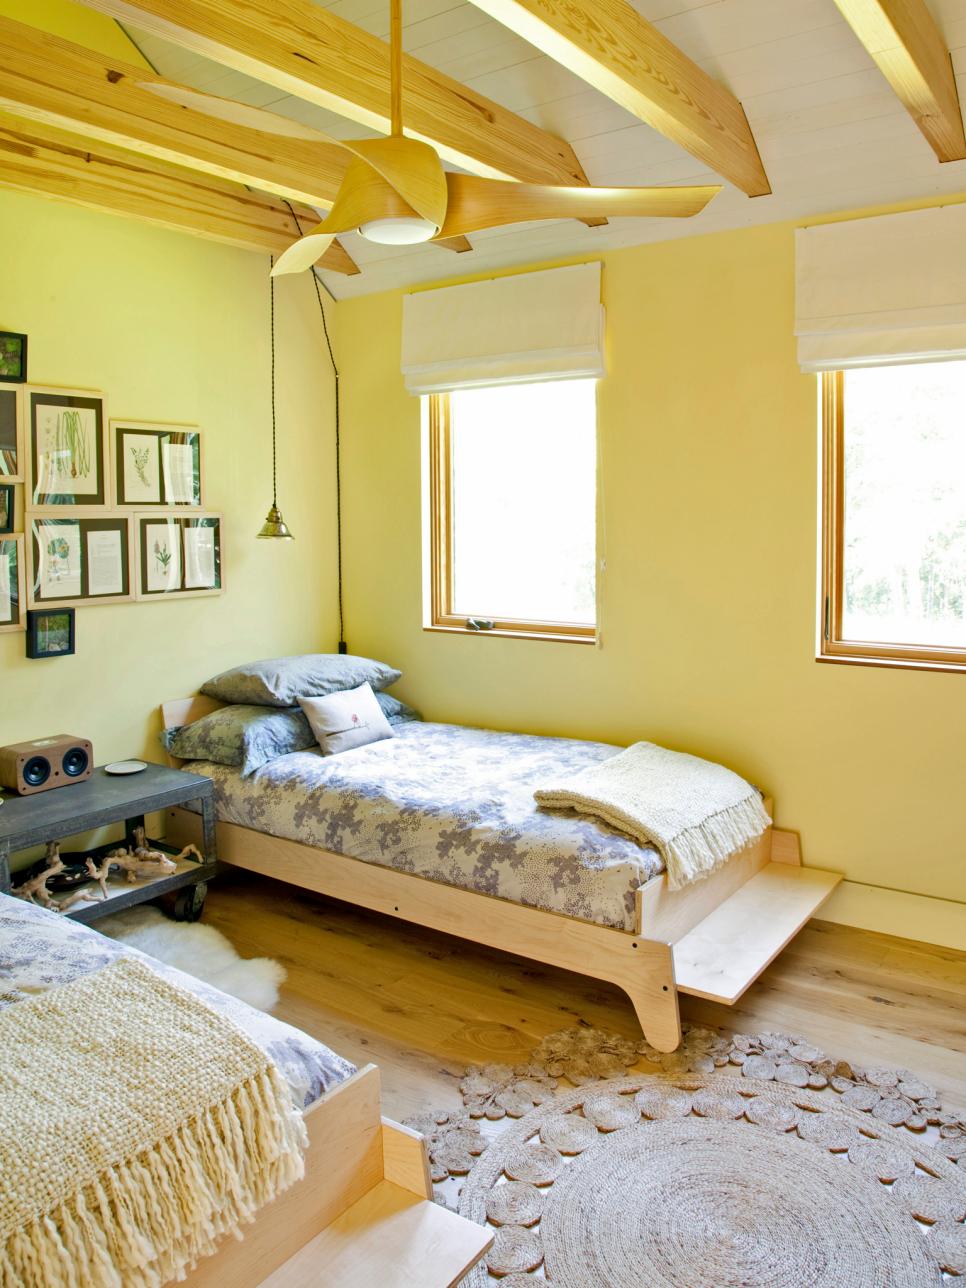 Minimalist Yellow Bedroom with Simple Decor